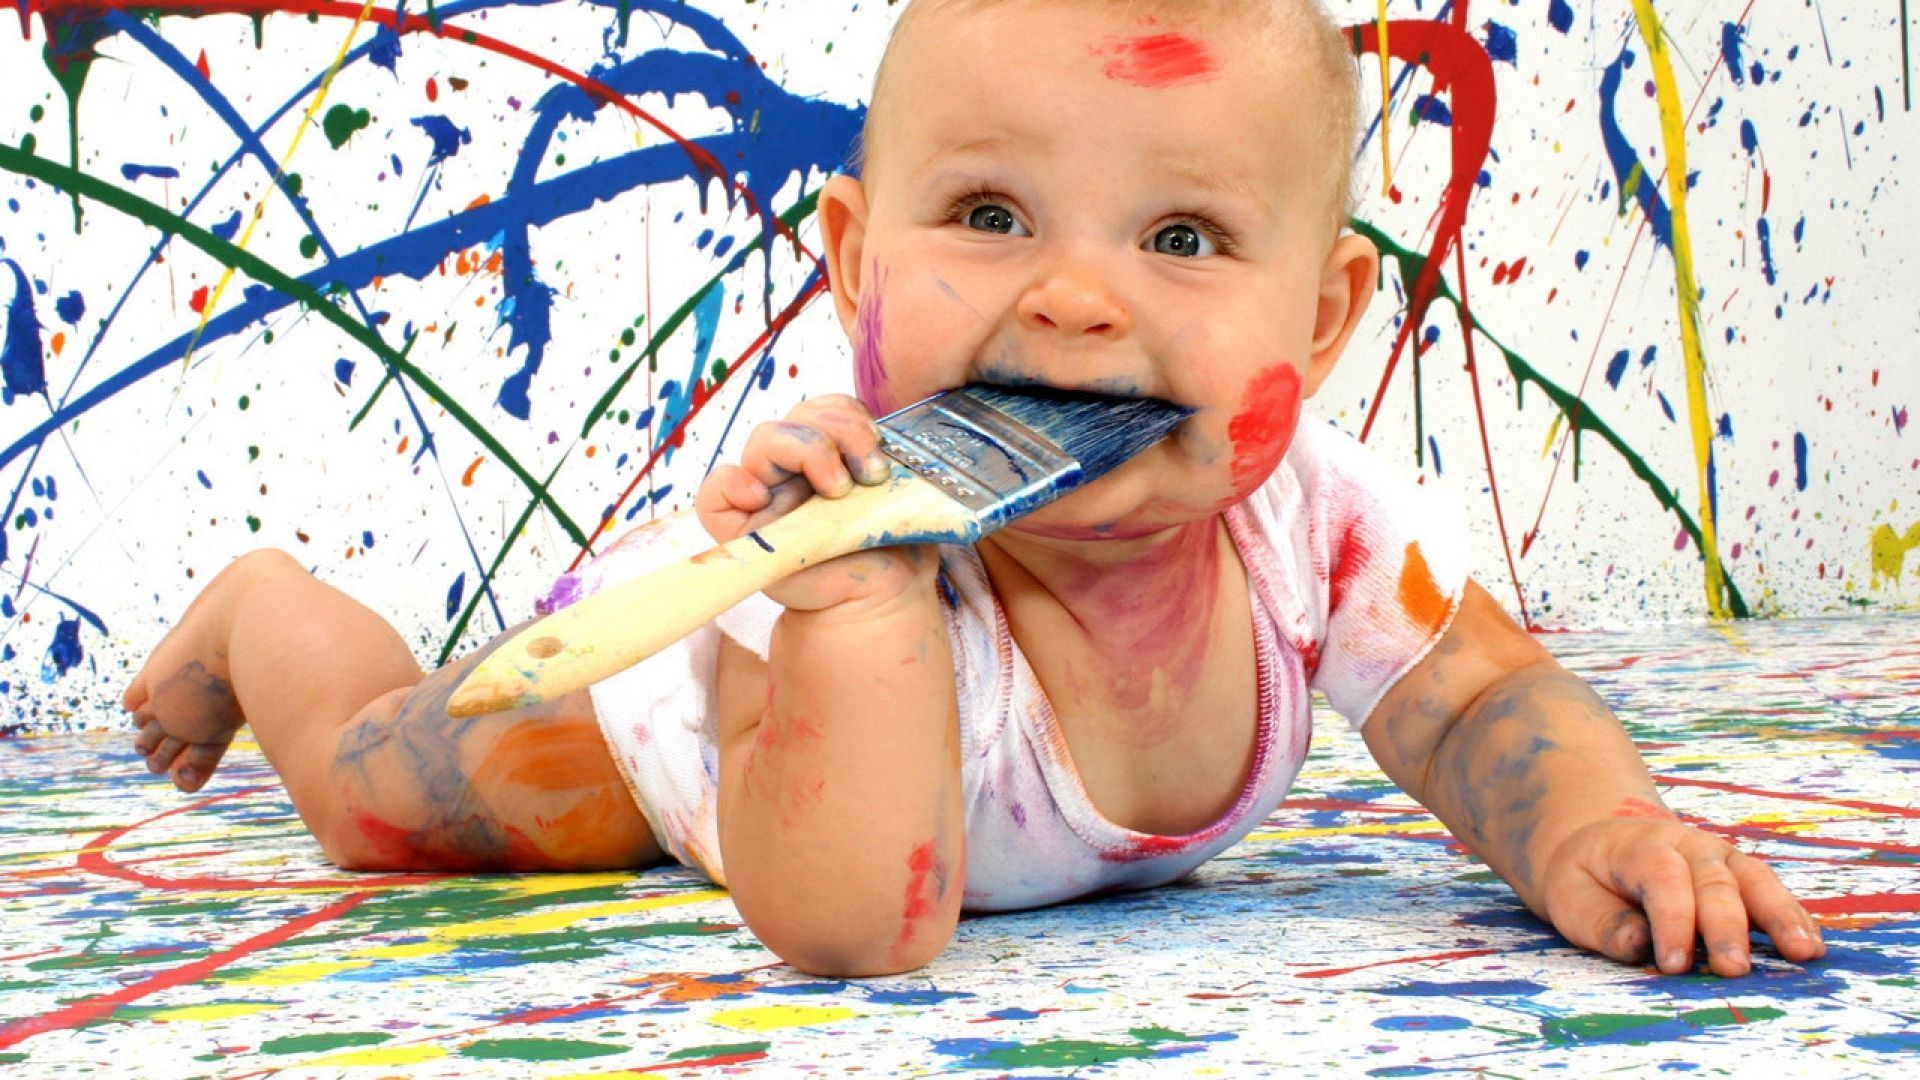 Cute Baby HD Photos | Download Free Desktop Wallpaper Images ...